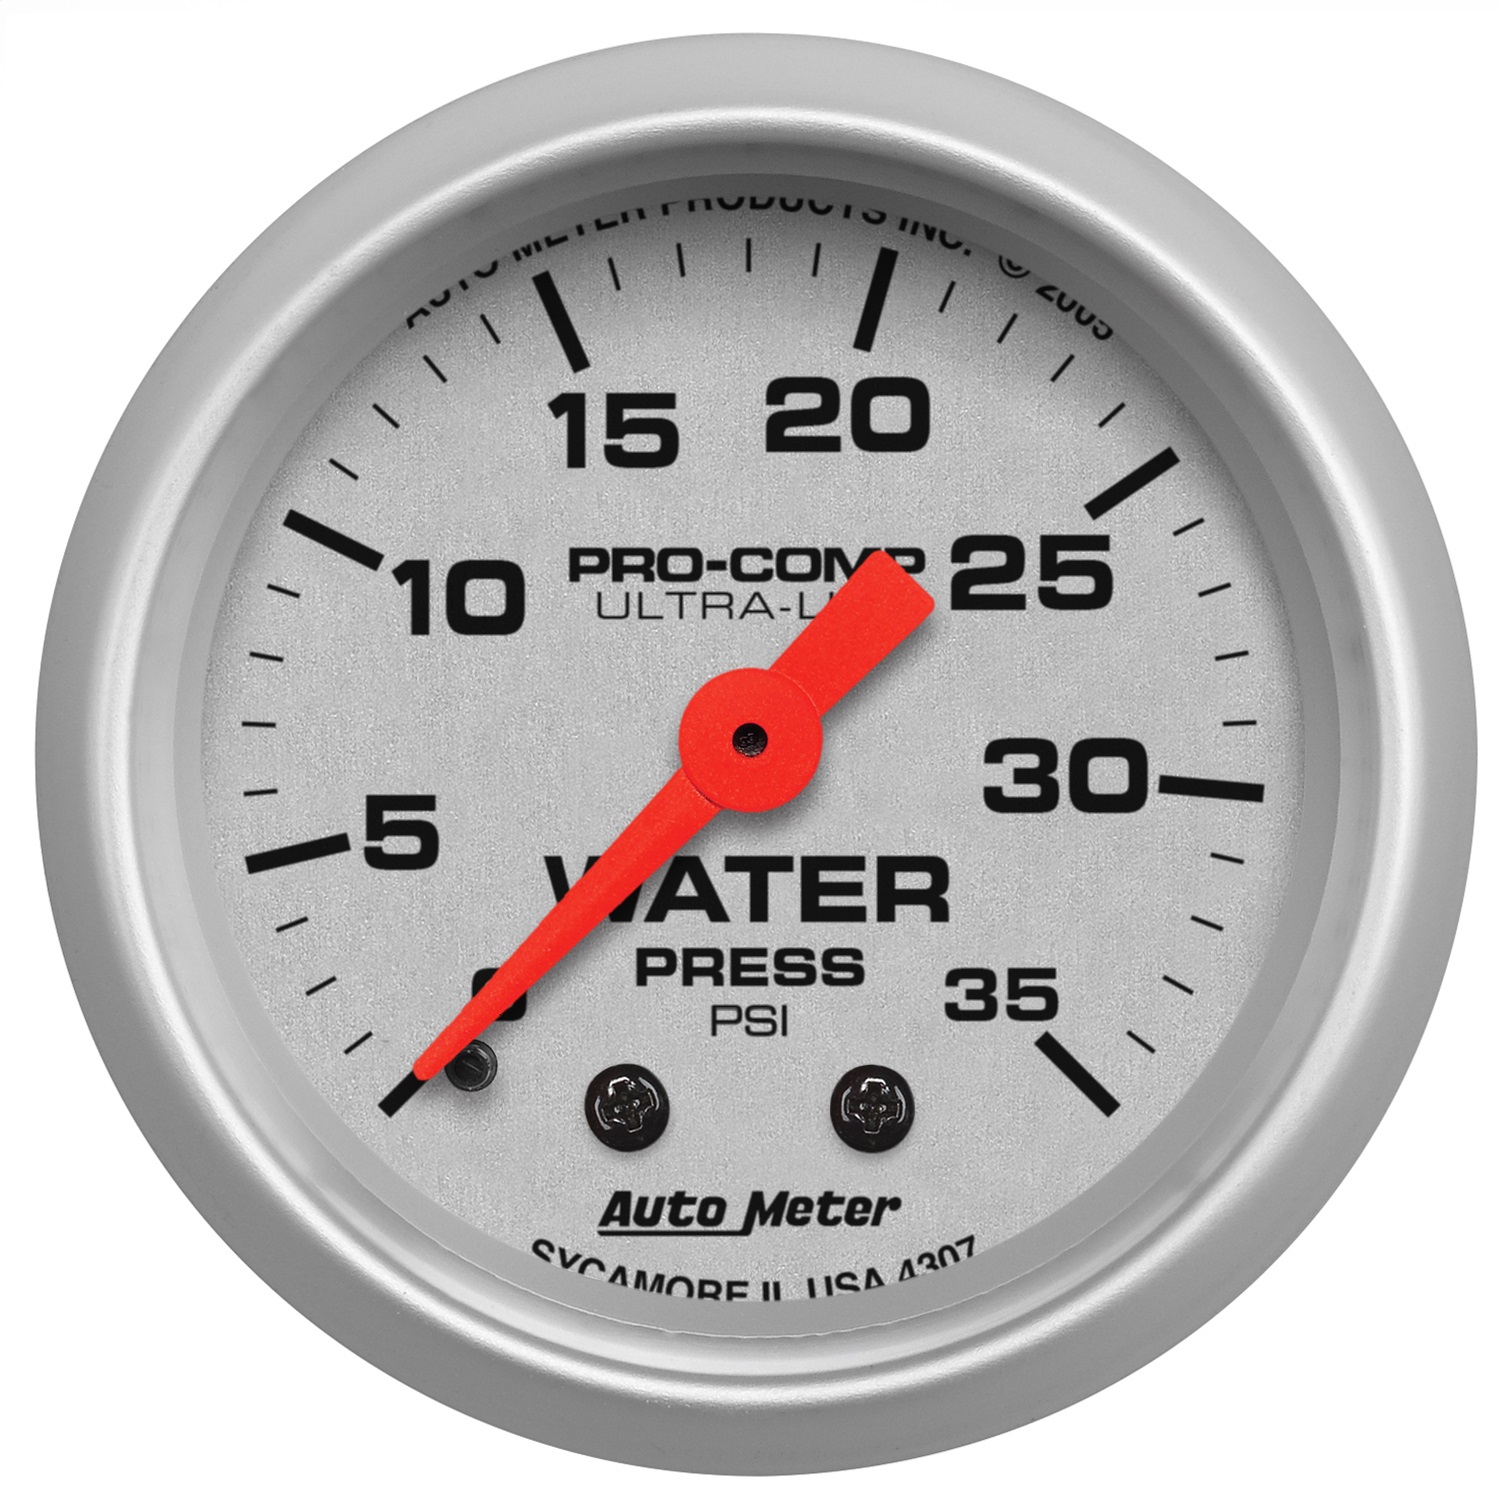 Auto Meter Auto Meter 4307 Ultra-Lite; Mechanical Water Pressure Gauge